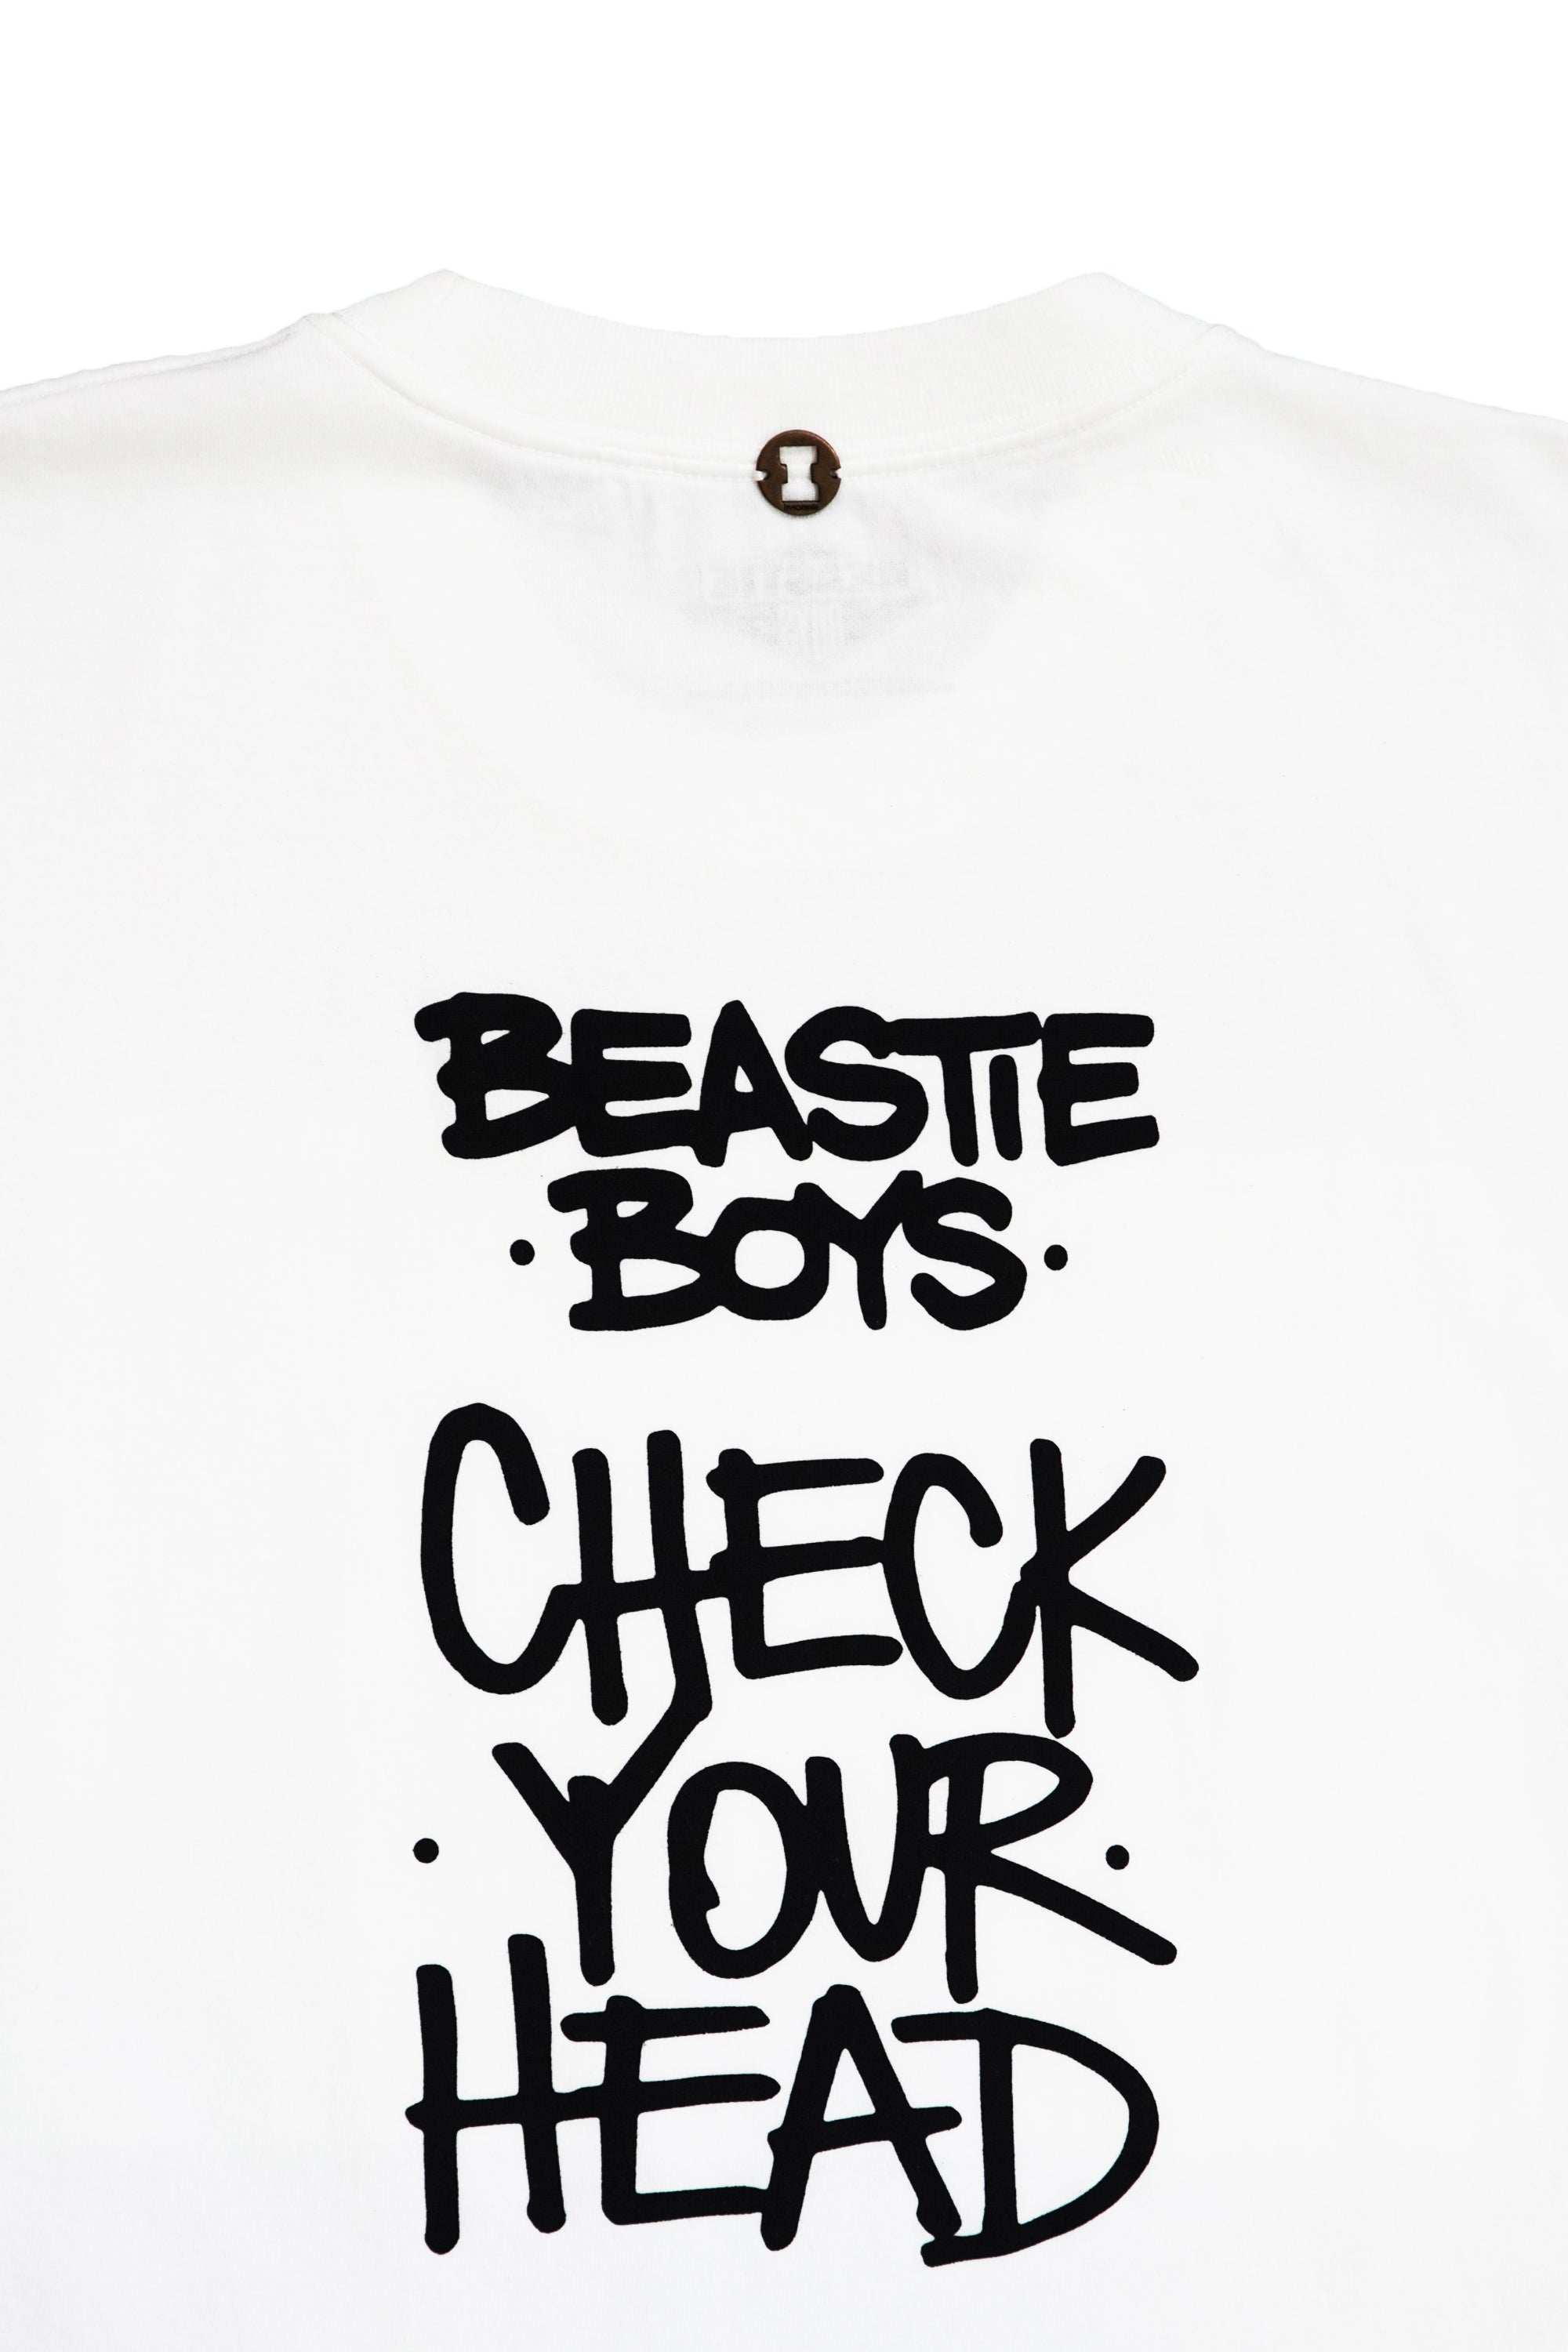 ×BEASTIE BOYS CHECK YOUR HEAD PHOTO TEE